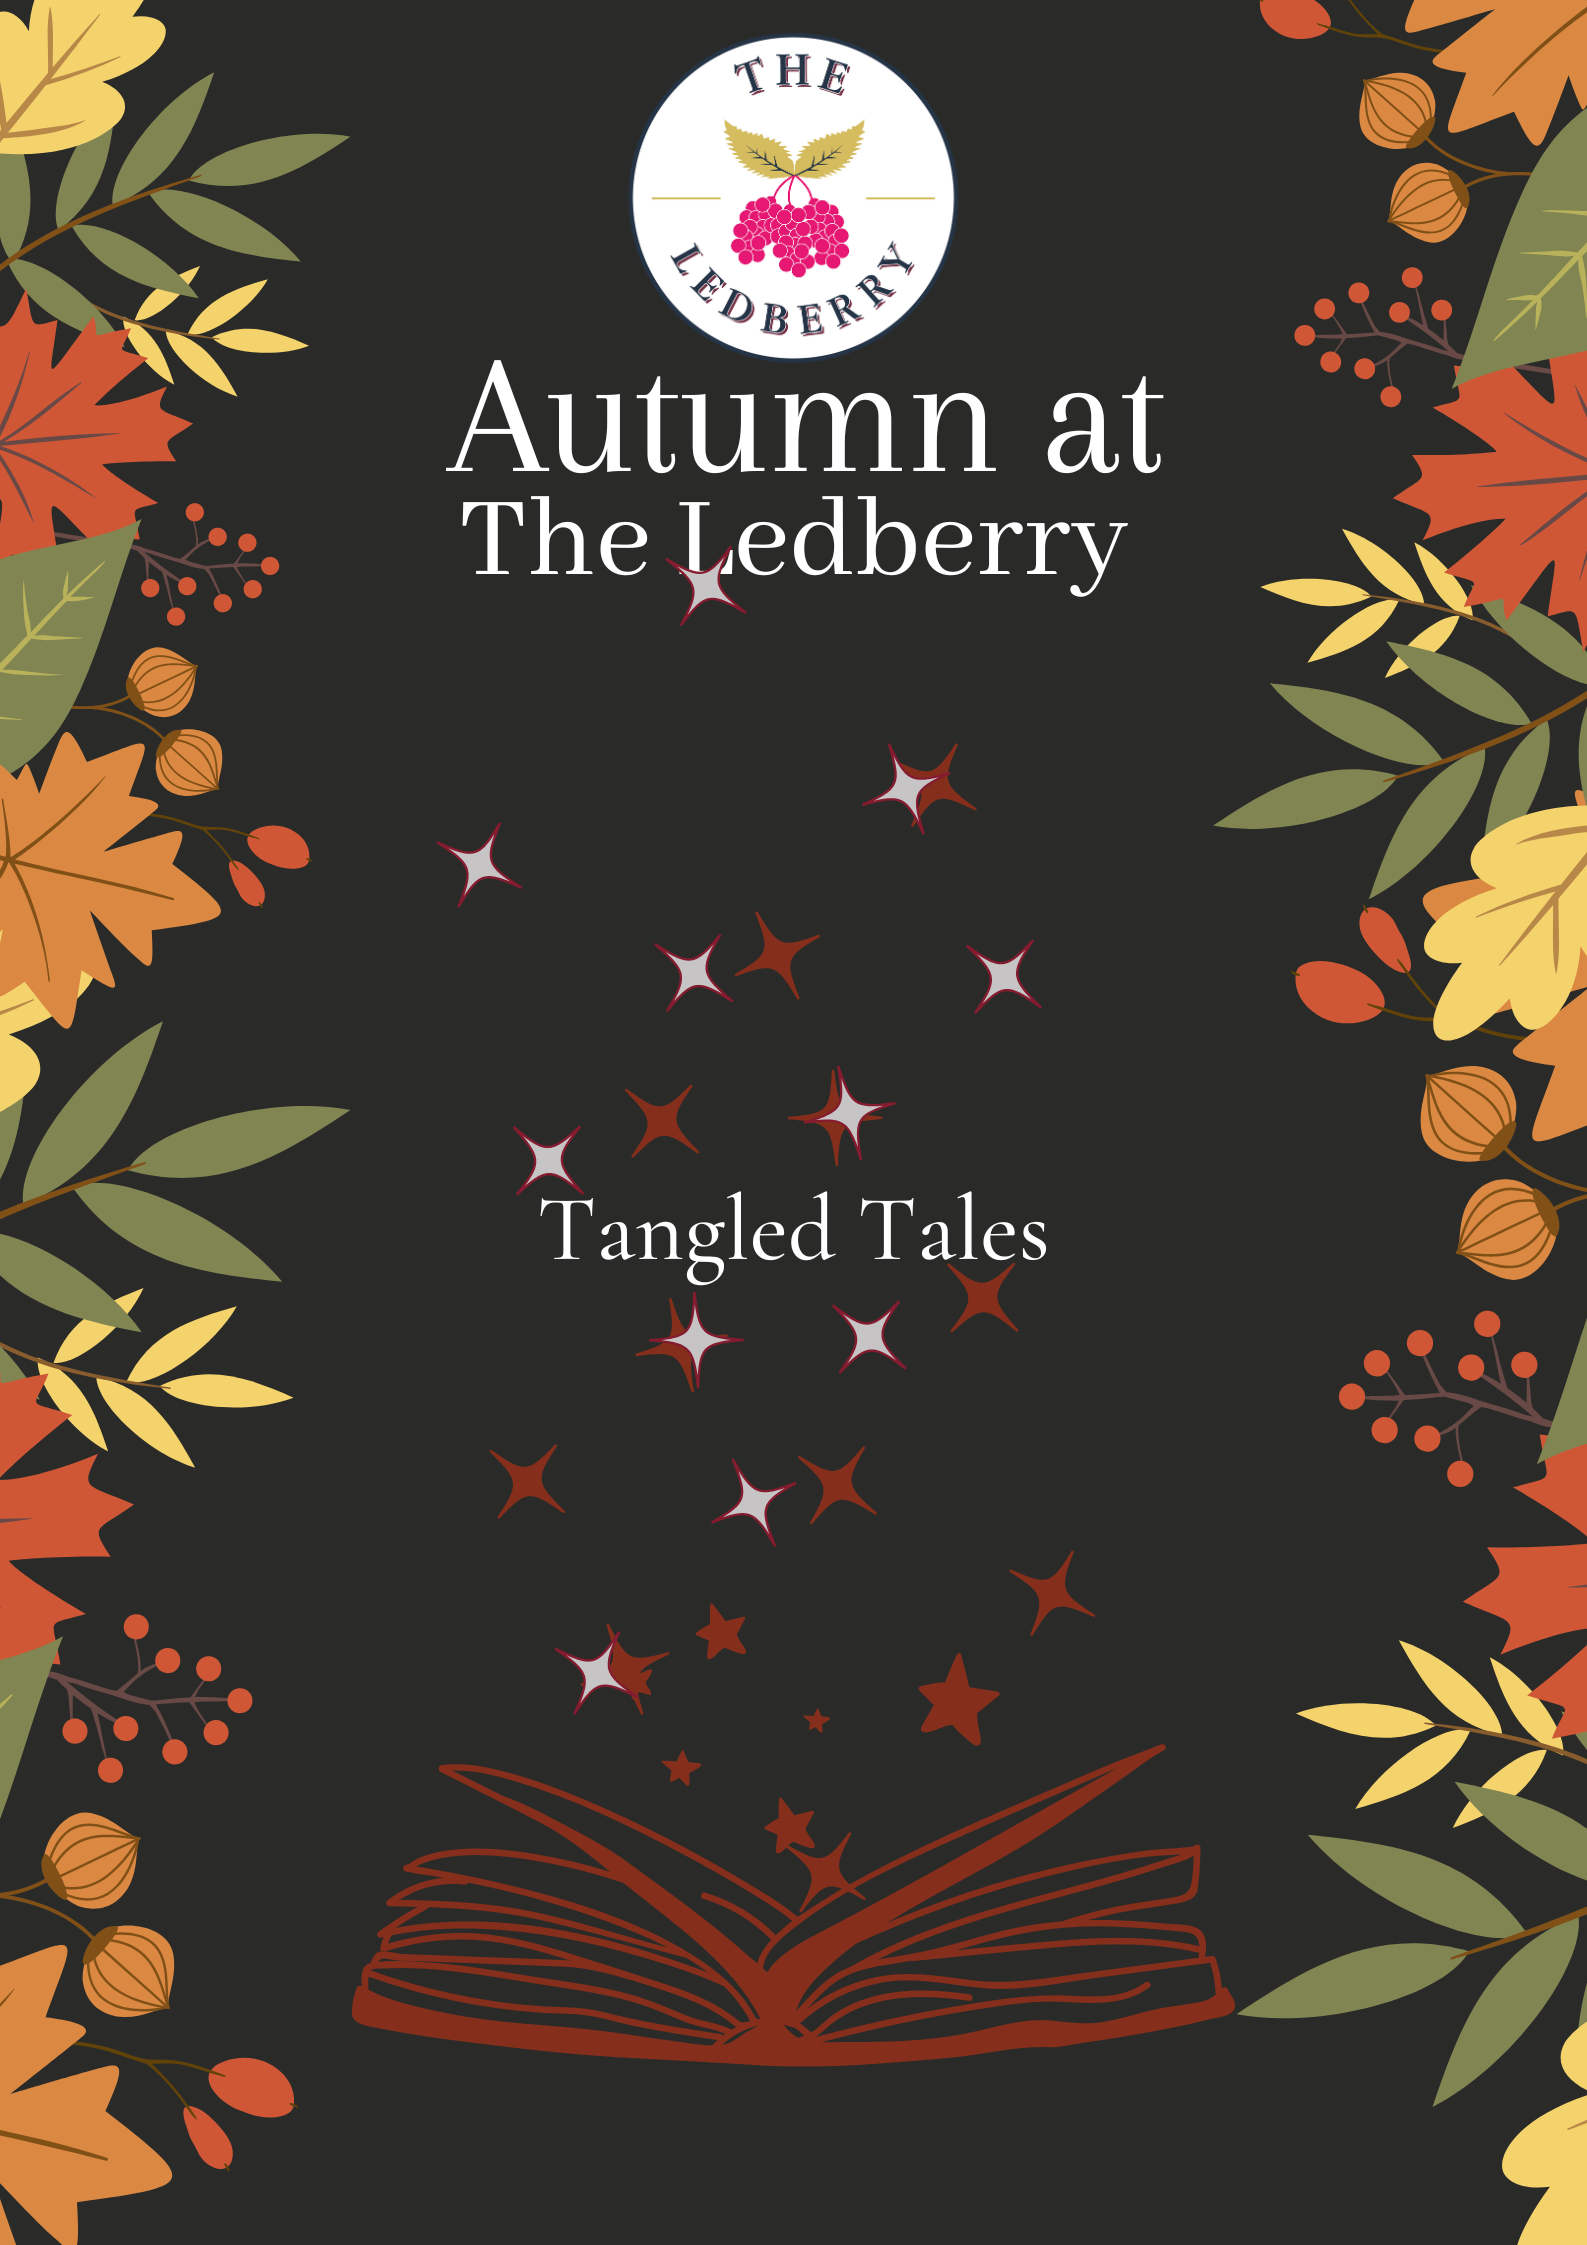 Tangled Tales: Seasonal Story Telling & Lino Printing - Friday 13th October